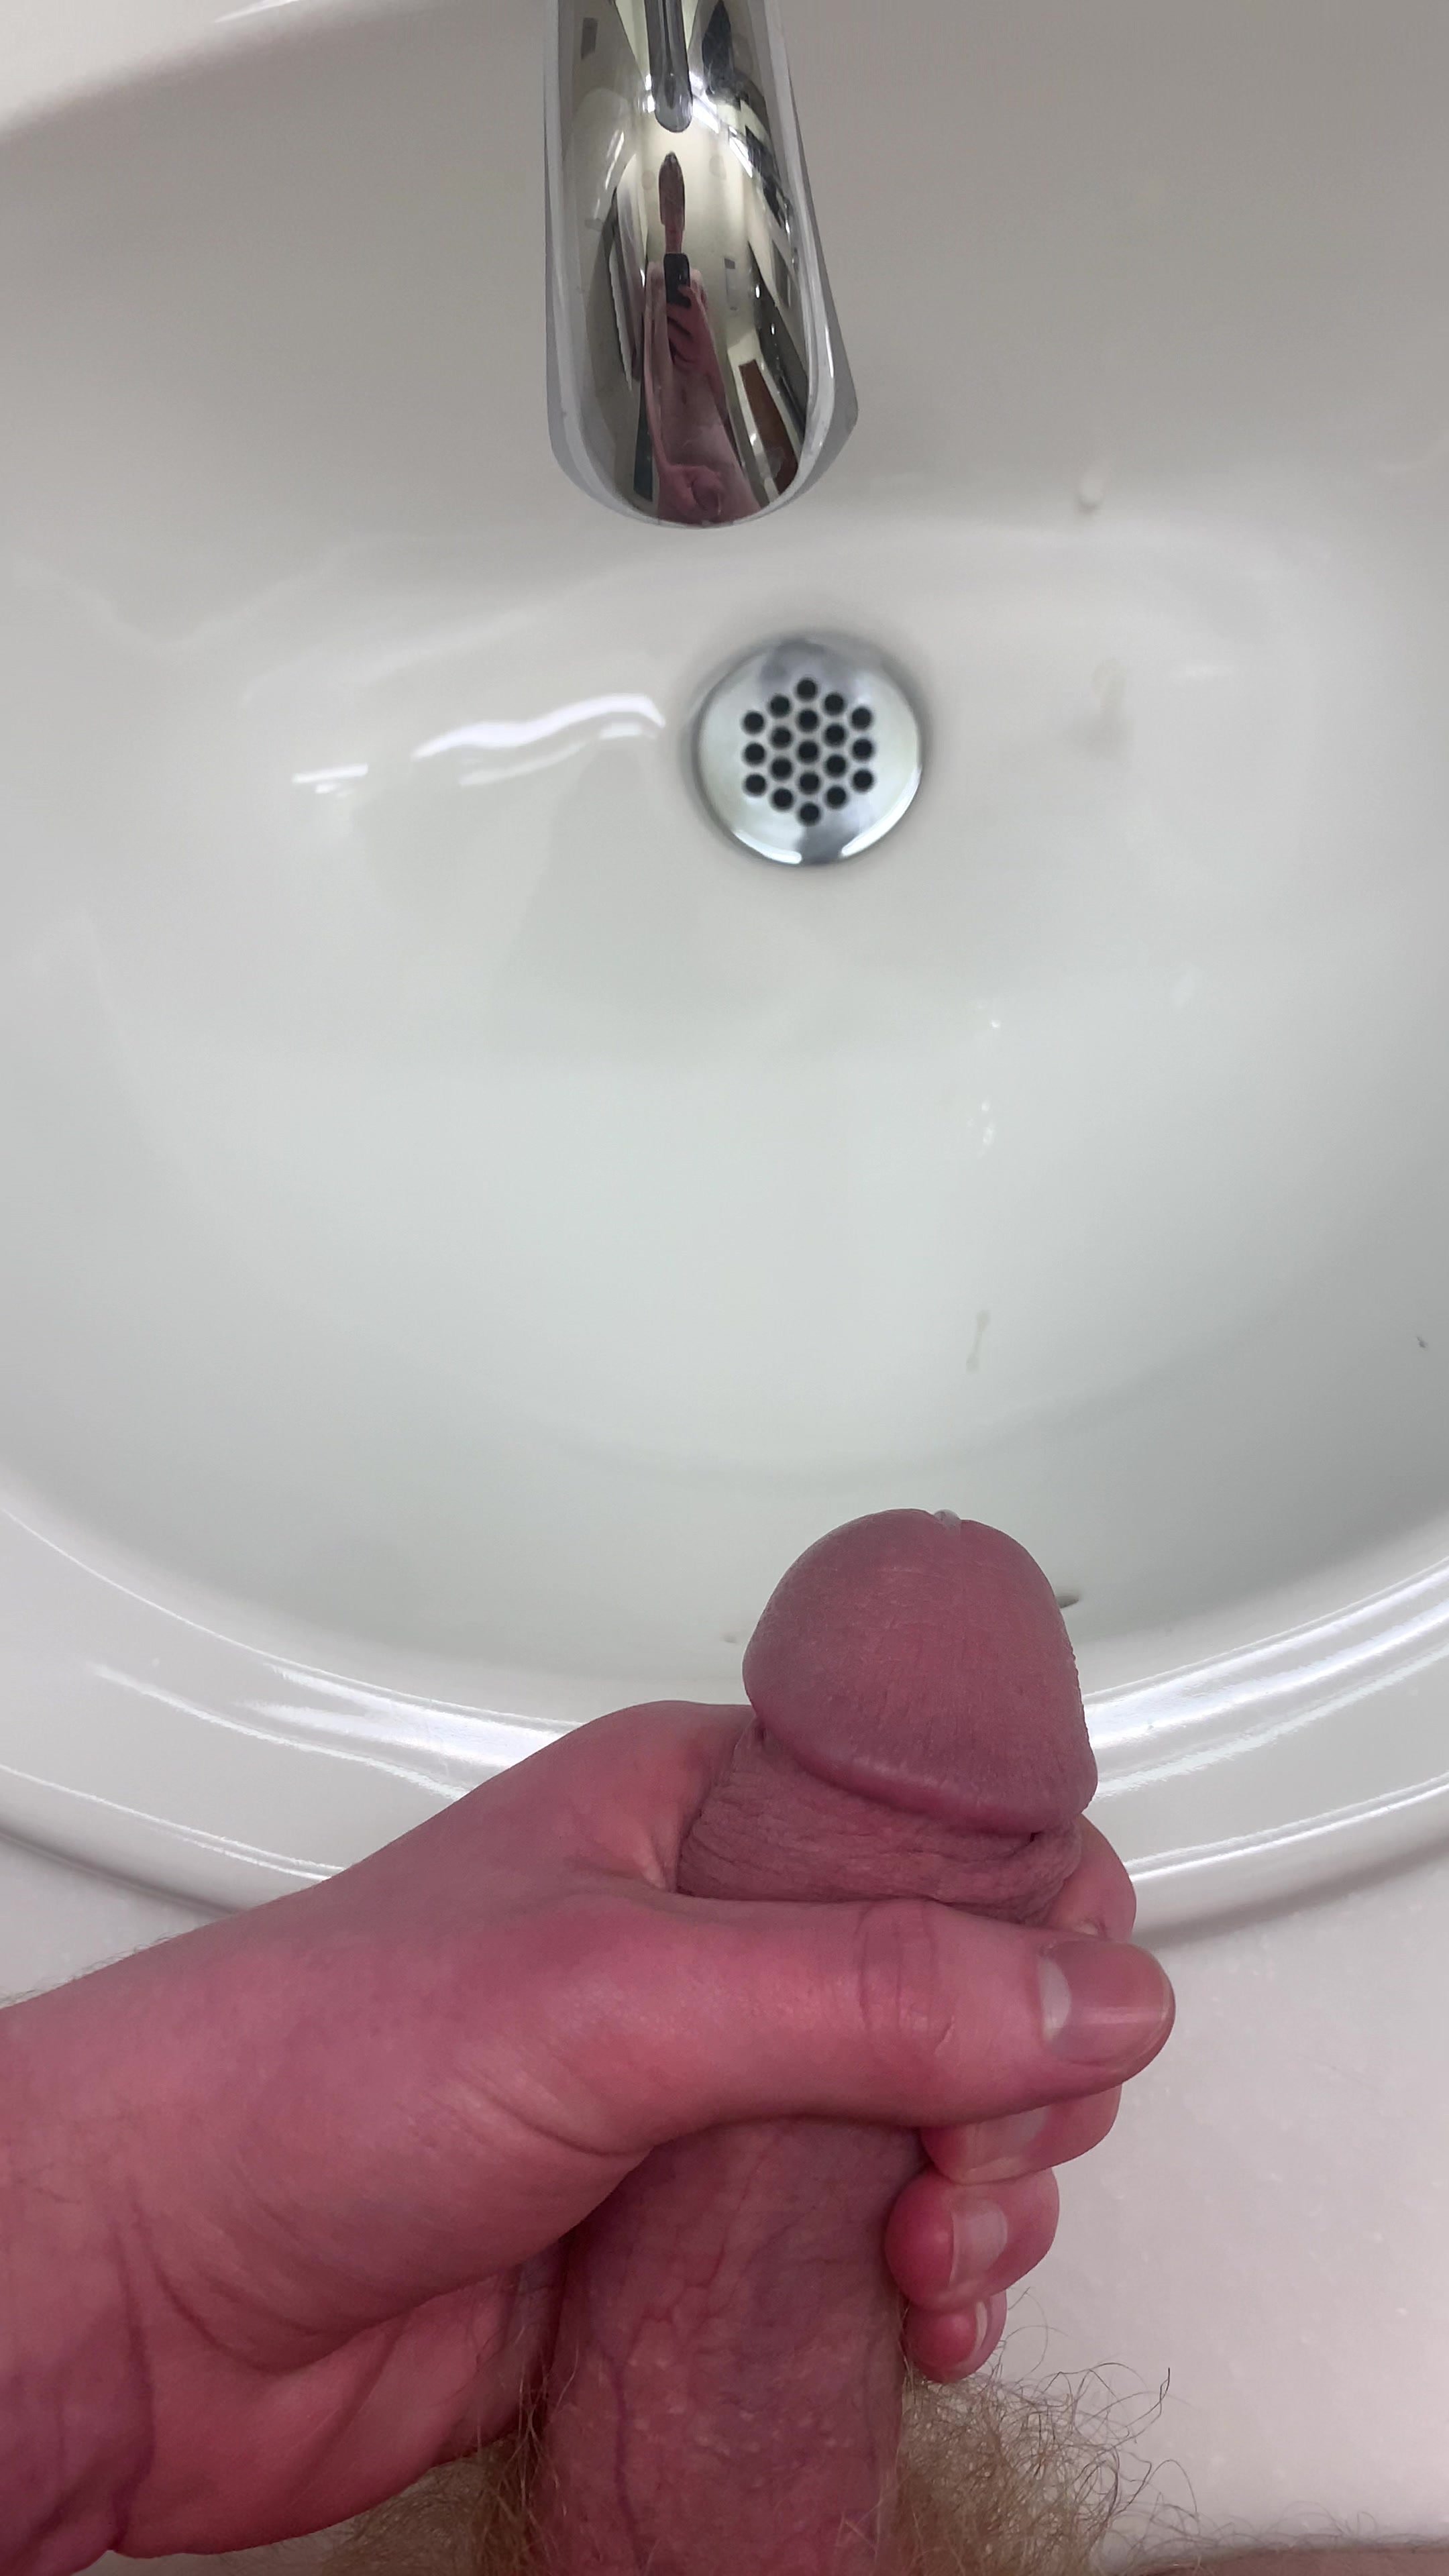 Cumming in the dorm communal bathroom